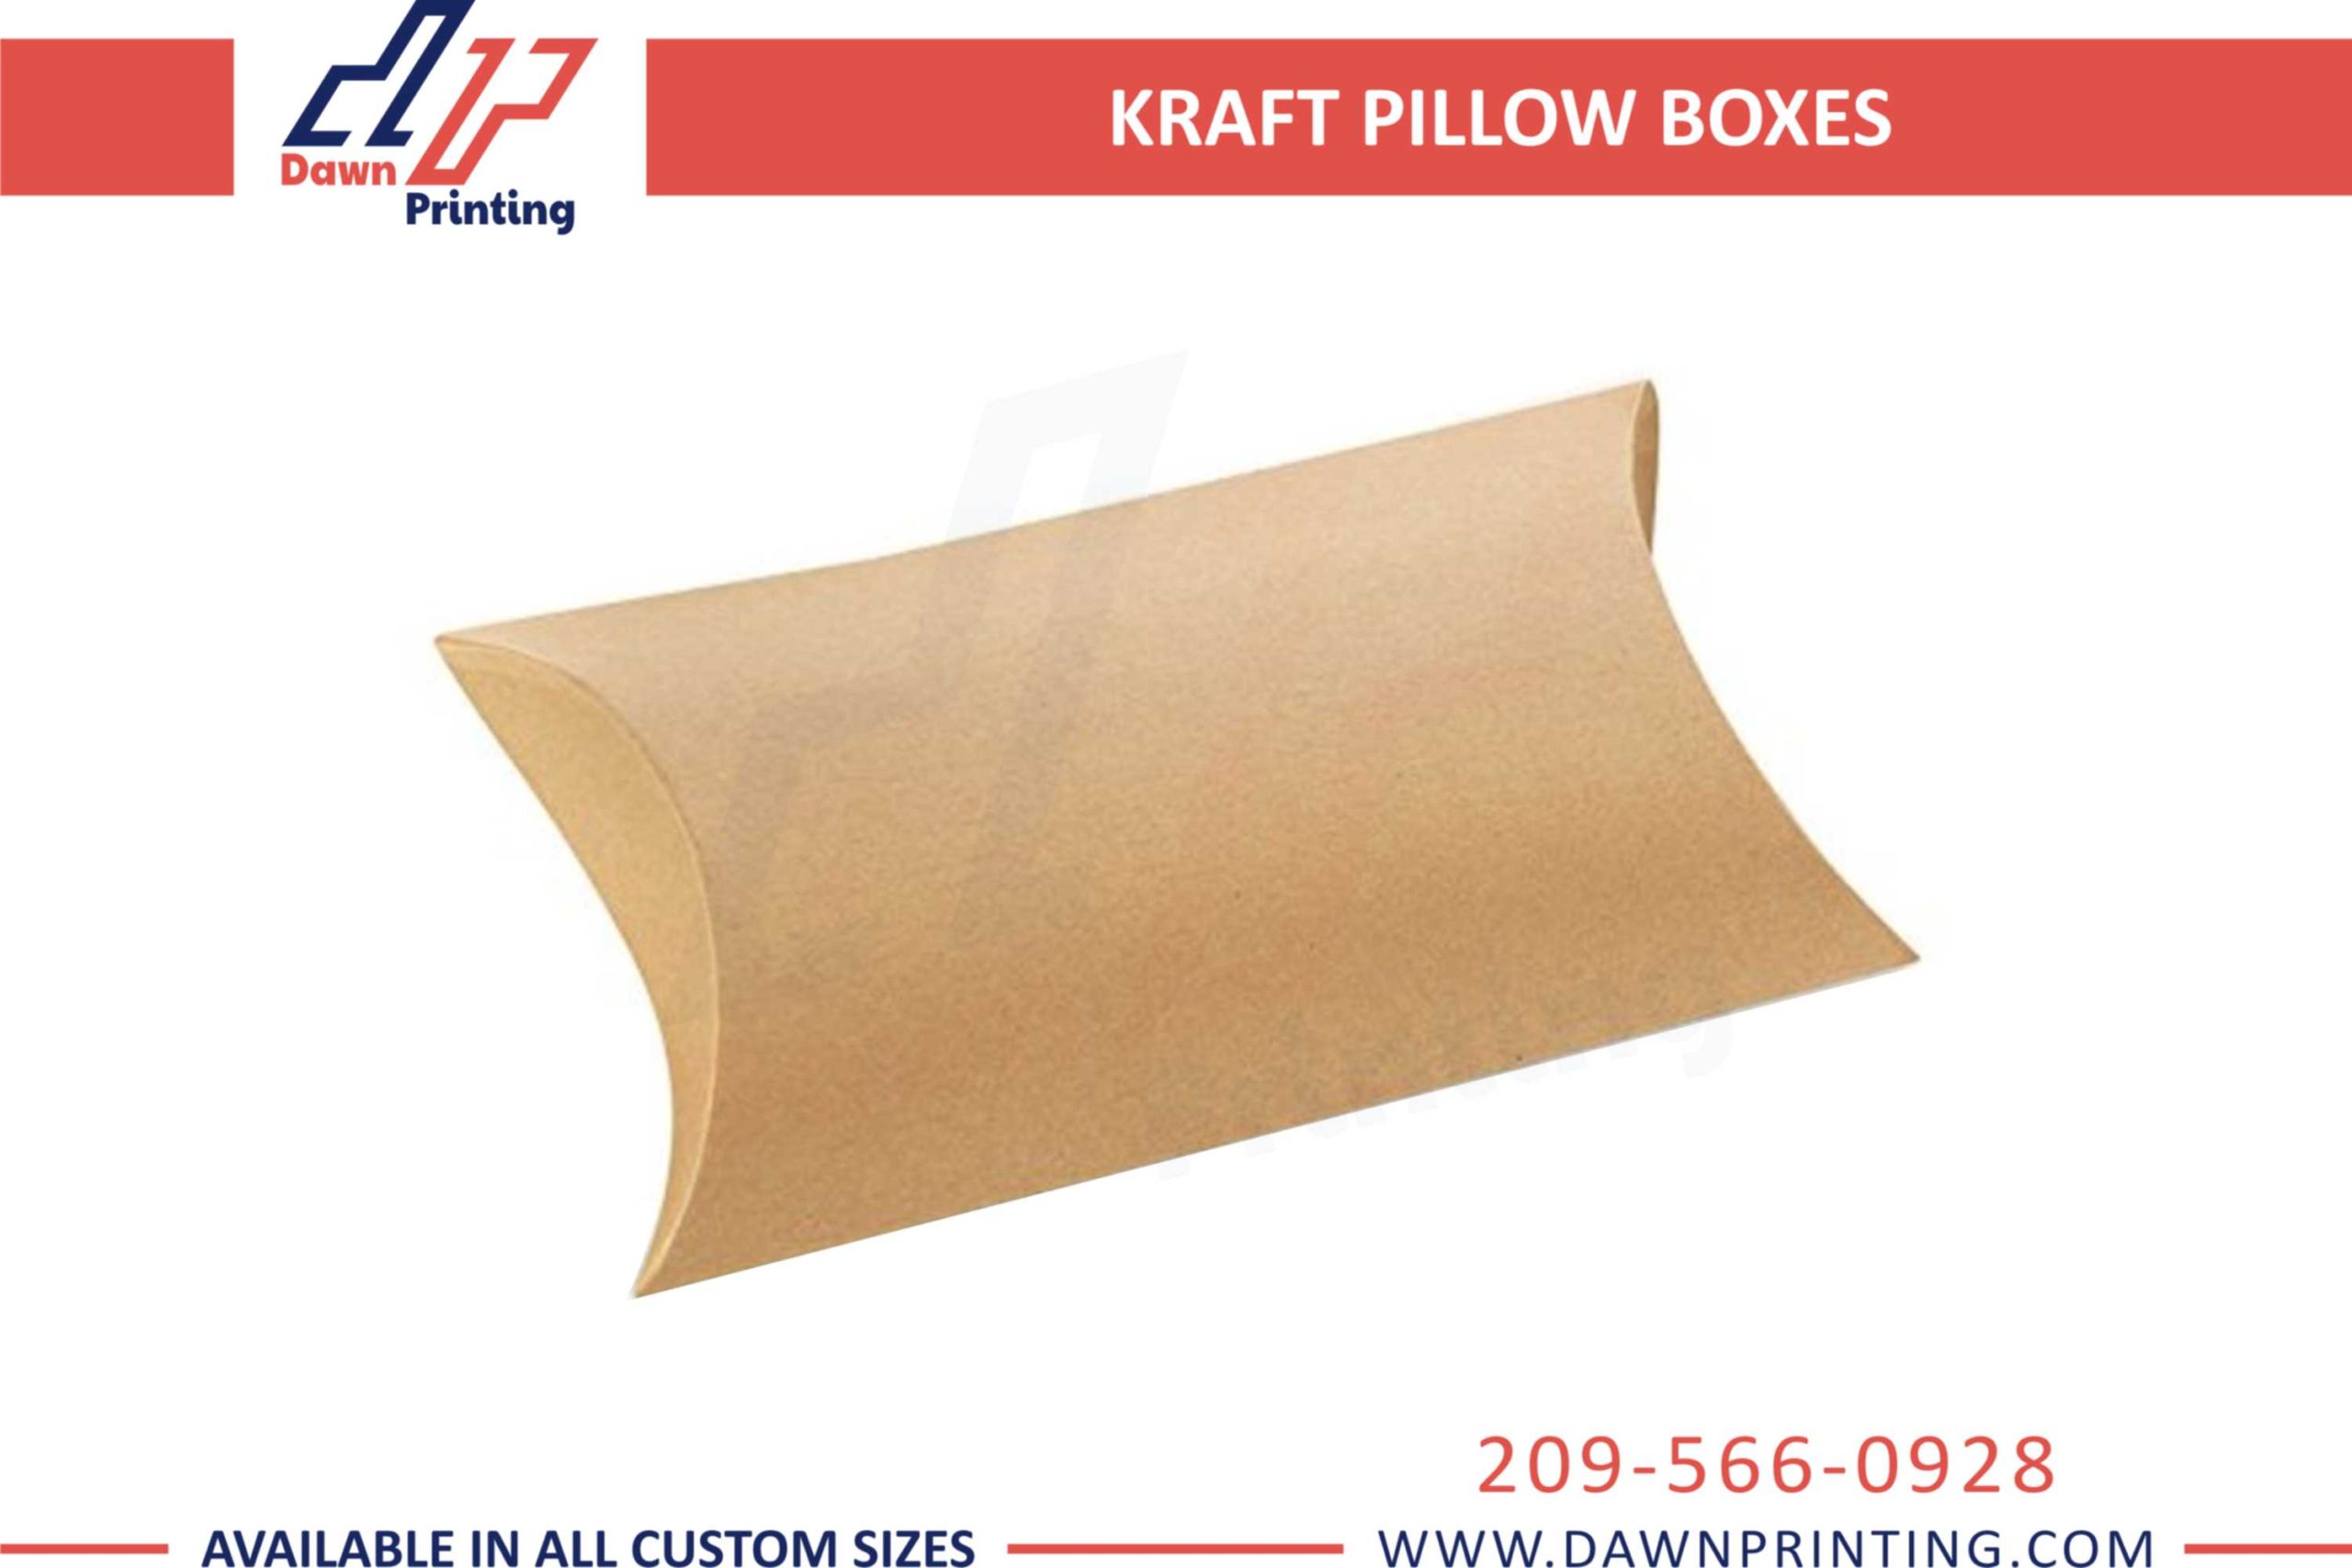 Wholesale Kraft Pillow Boxes with PVC - Dawn Printing